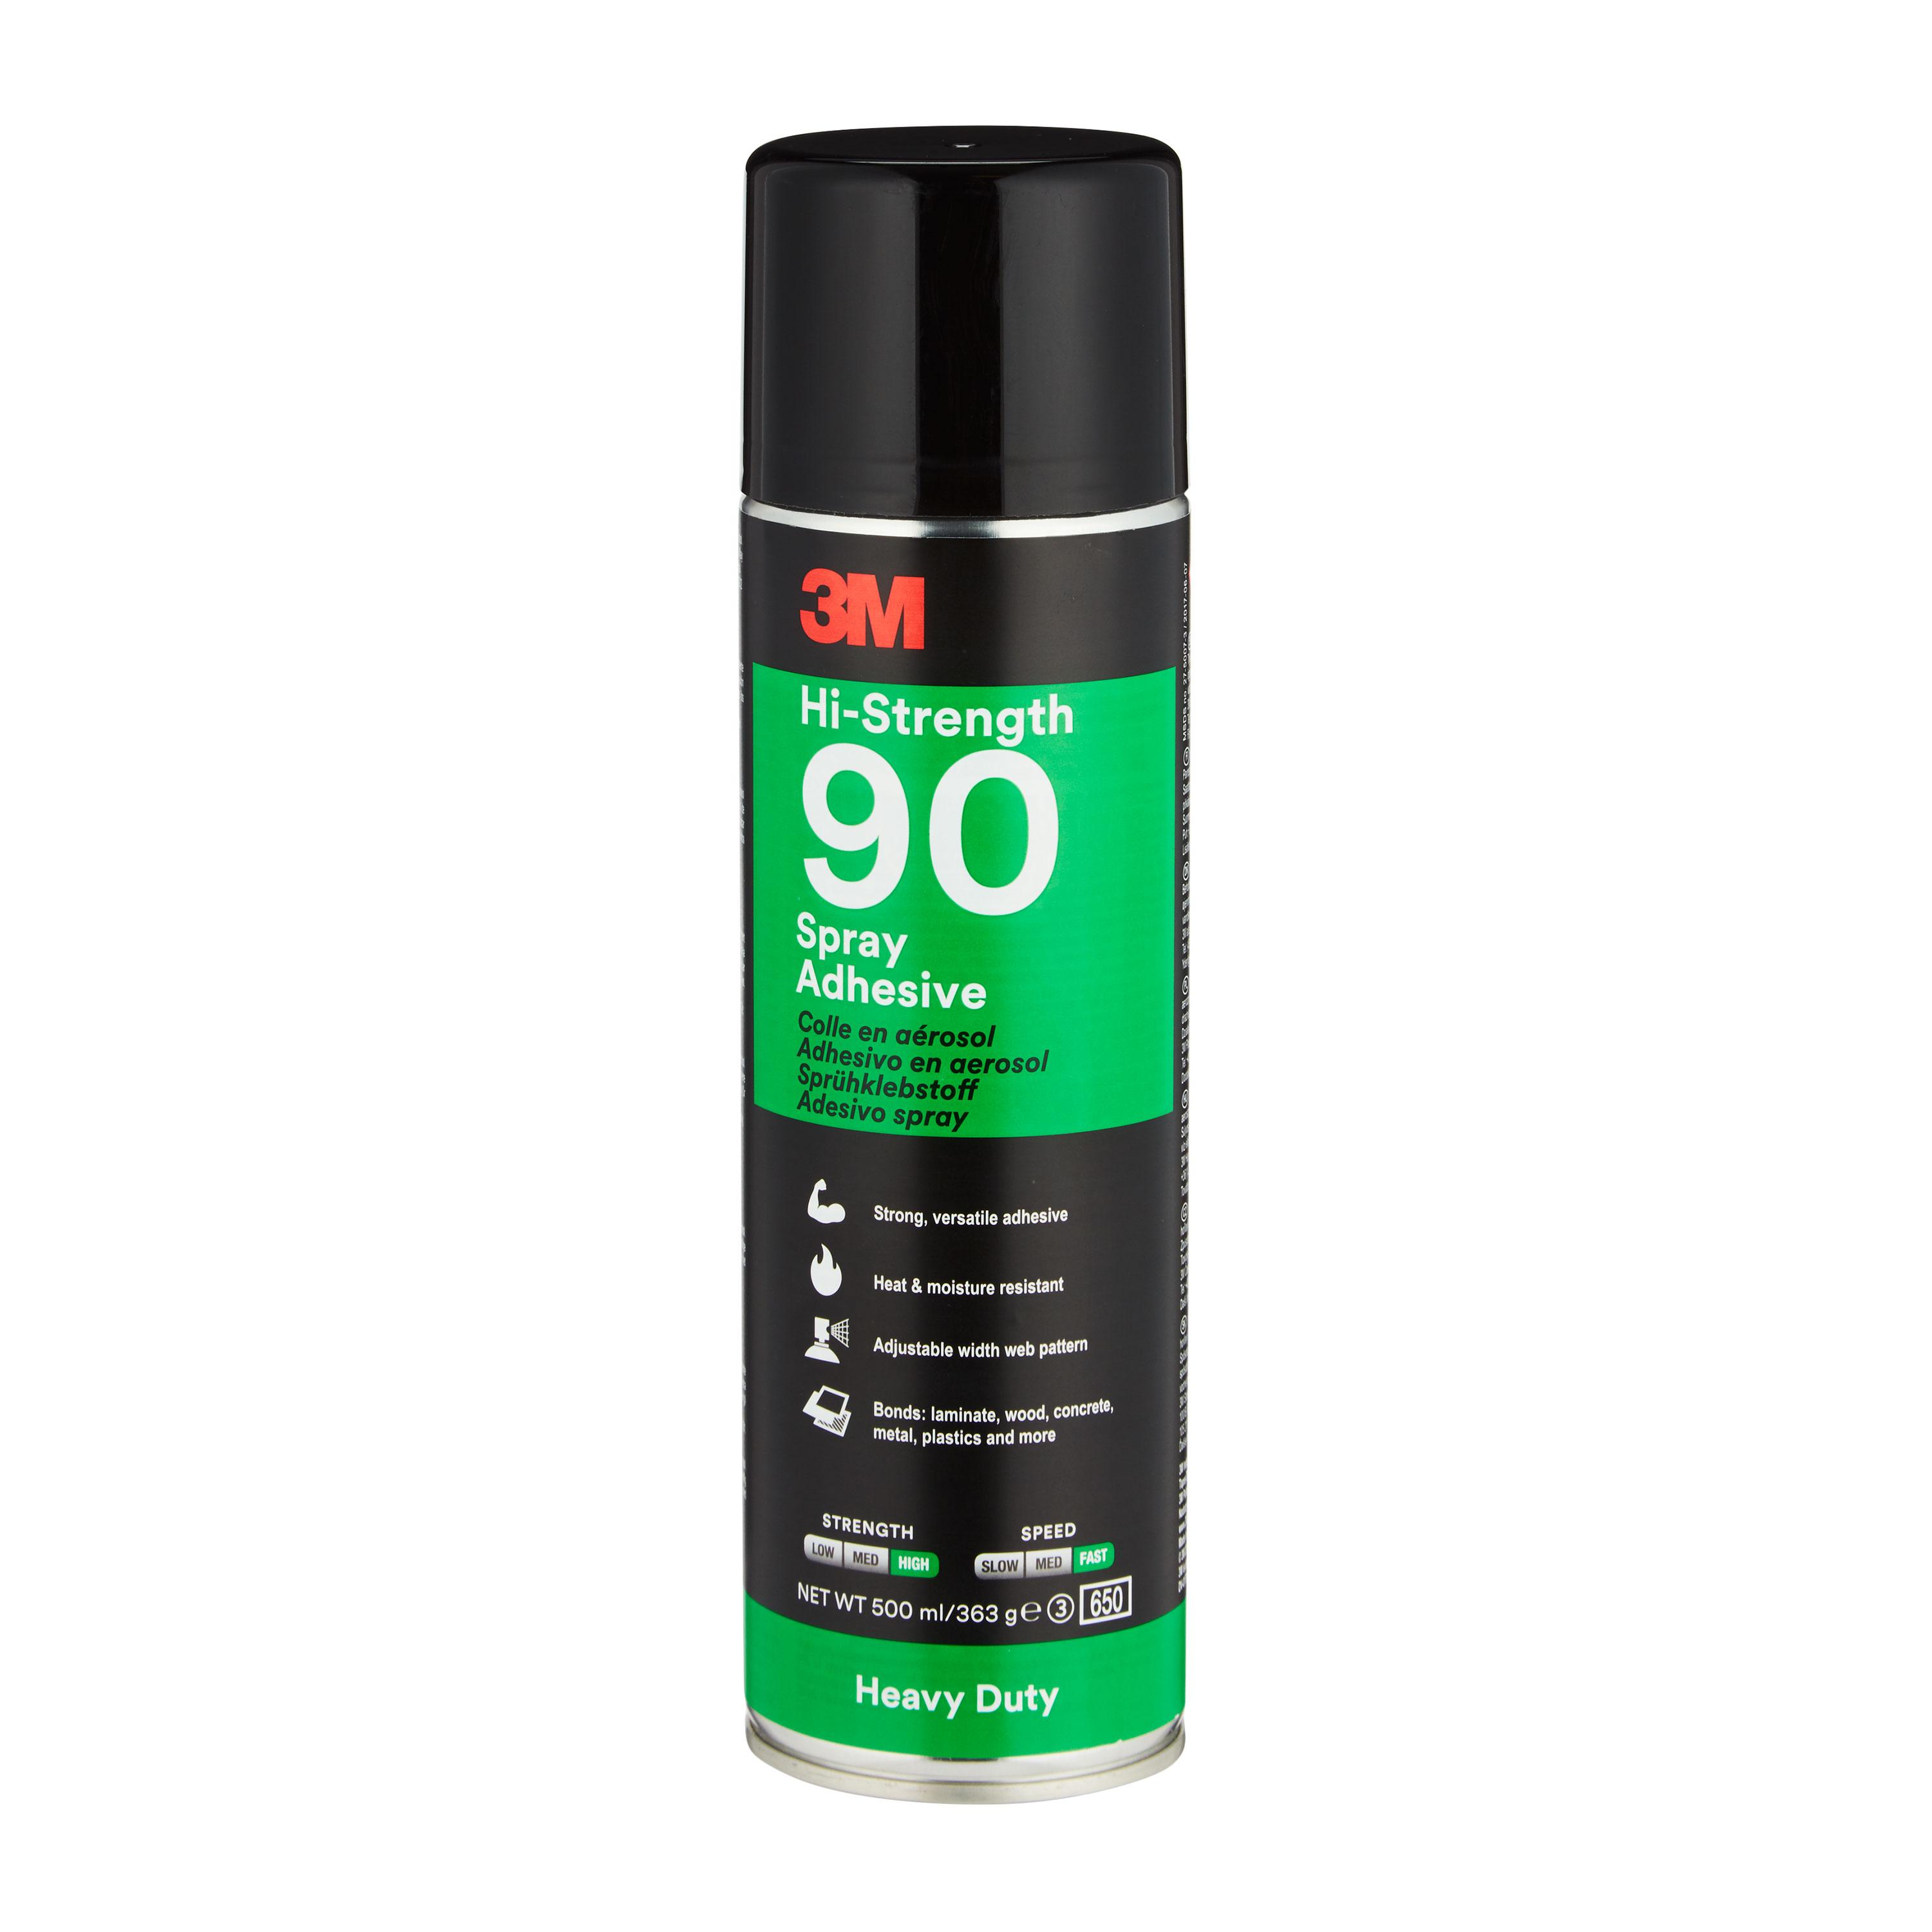 3M 90 Hi-Strength Spray Adhesive, 499gm - Adhesives, Coatings